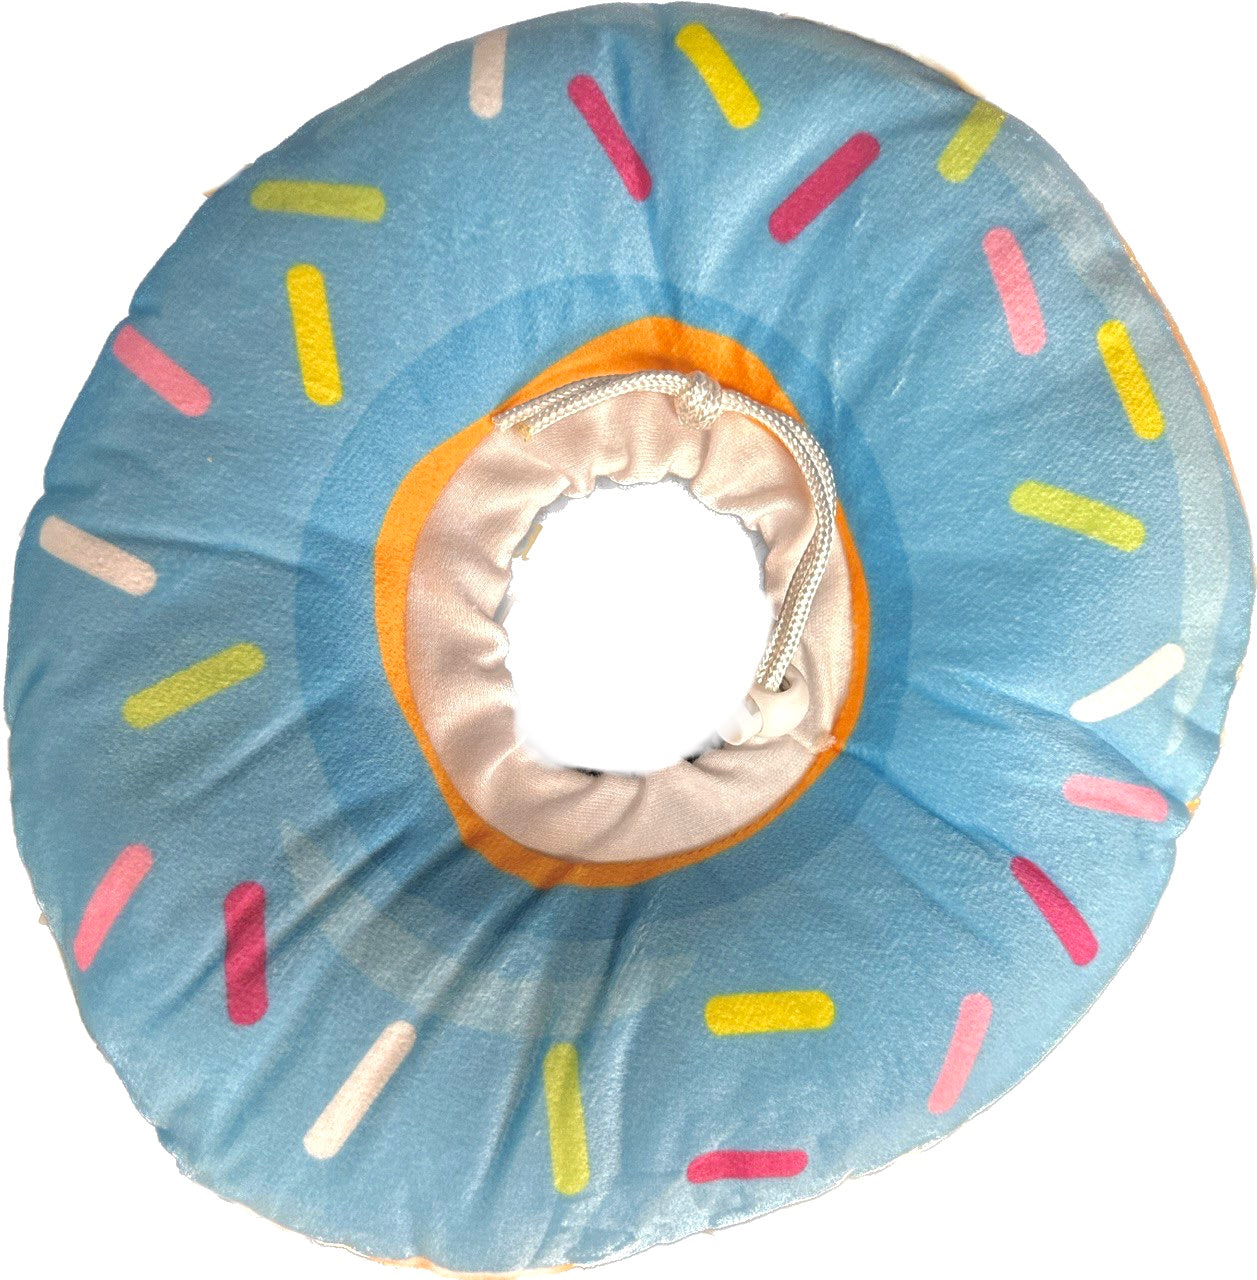 Donut E-Collars